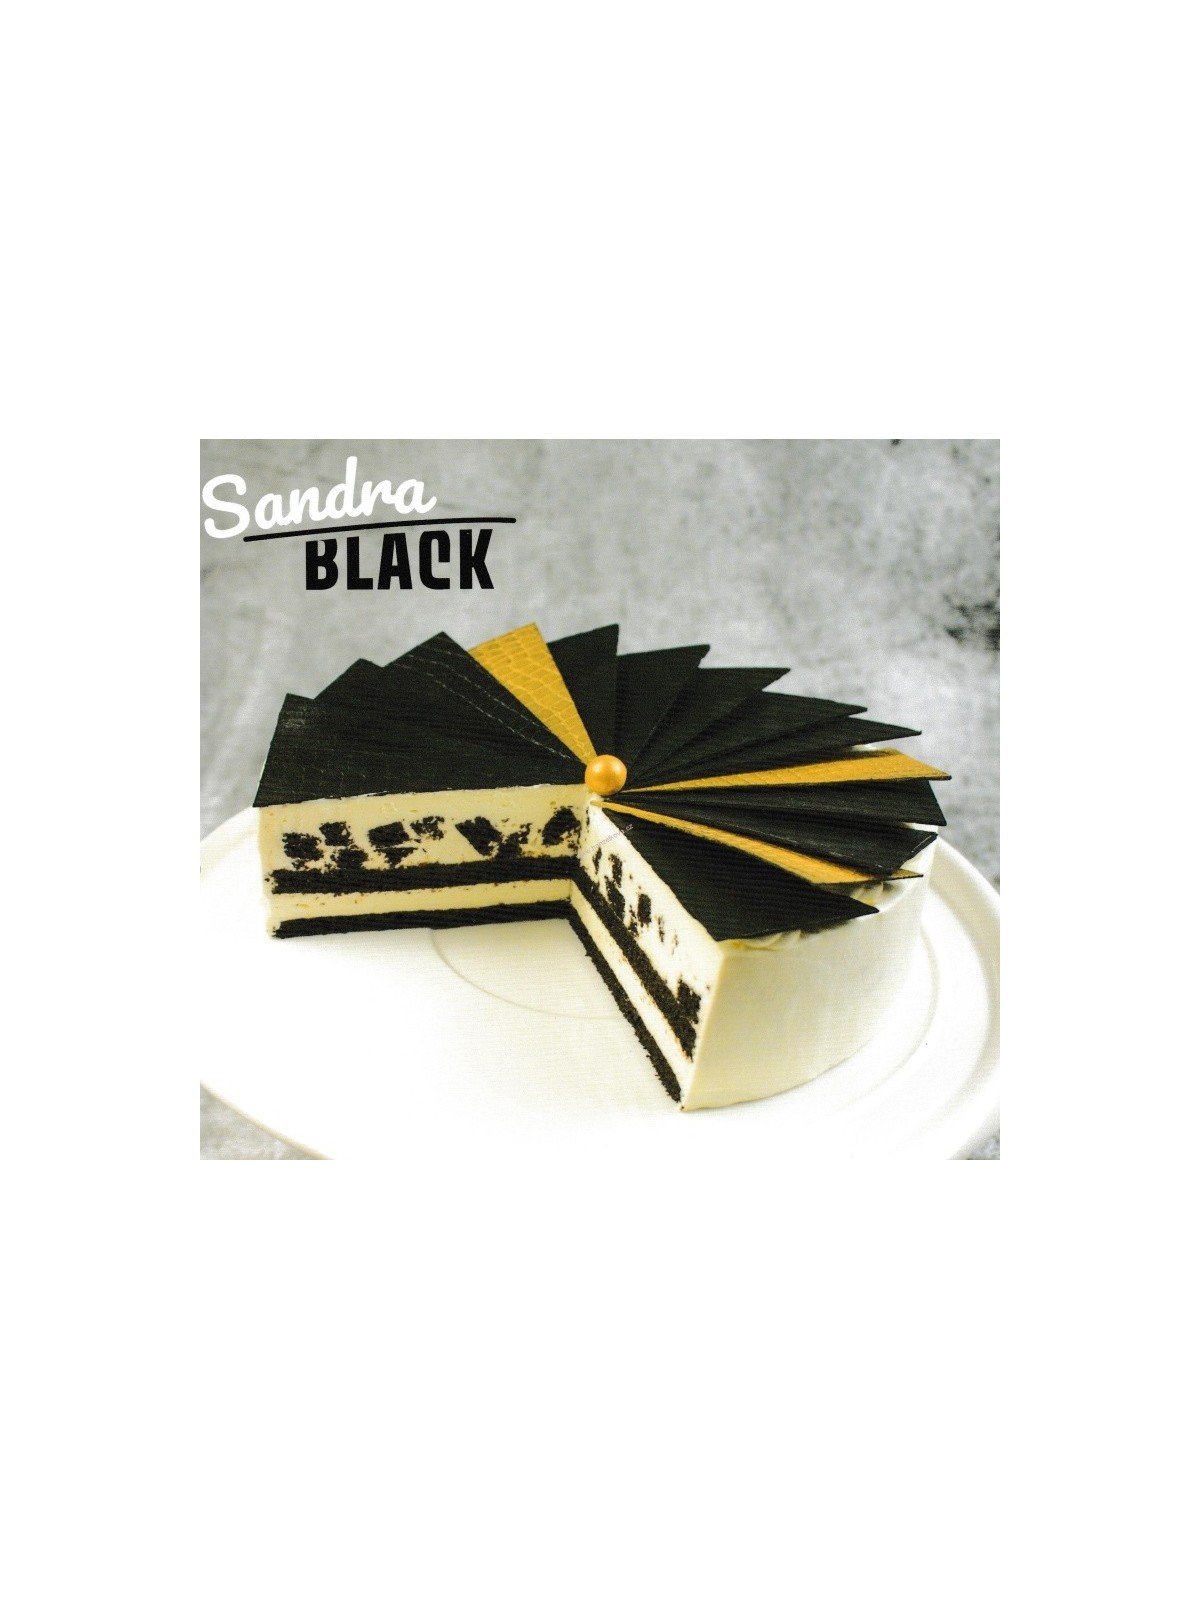 Sandra Black - 5kg